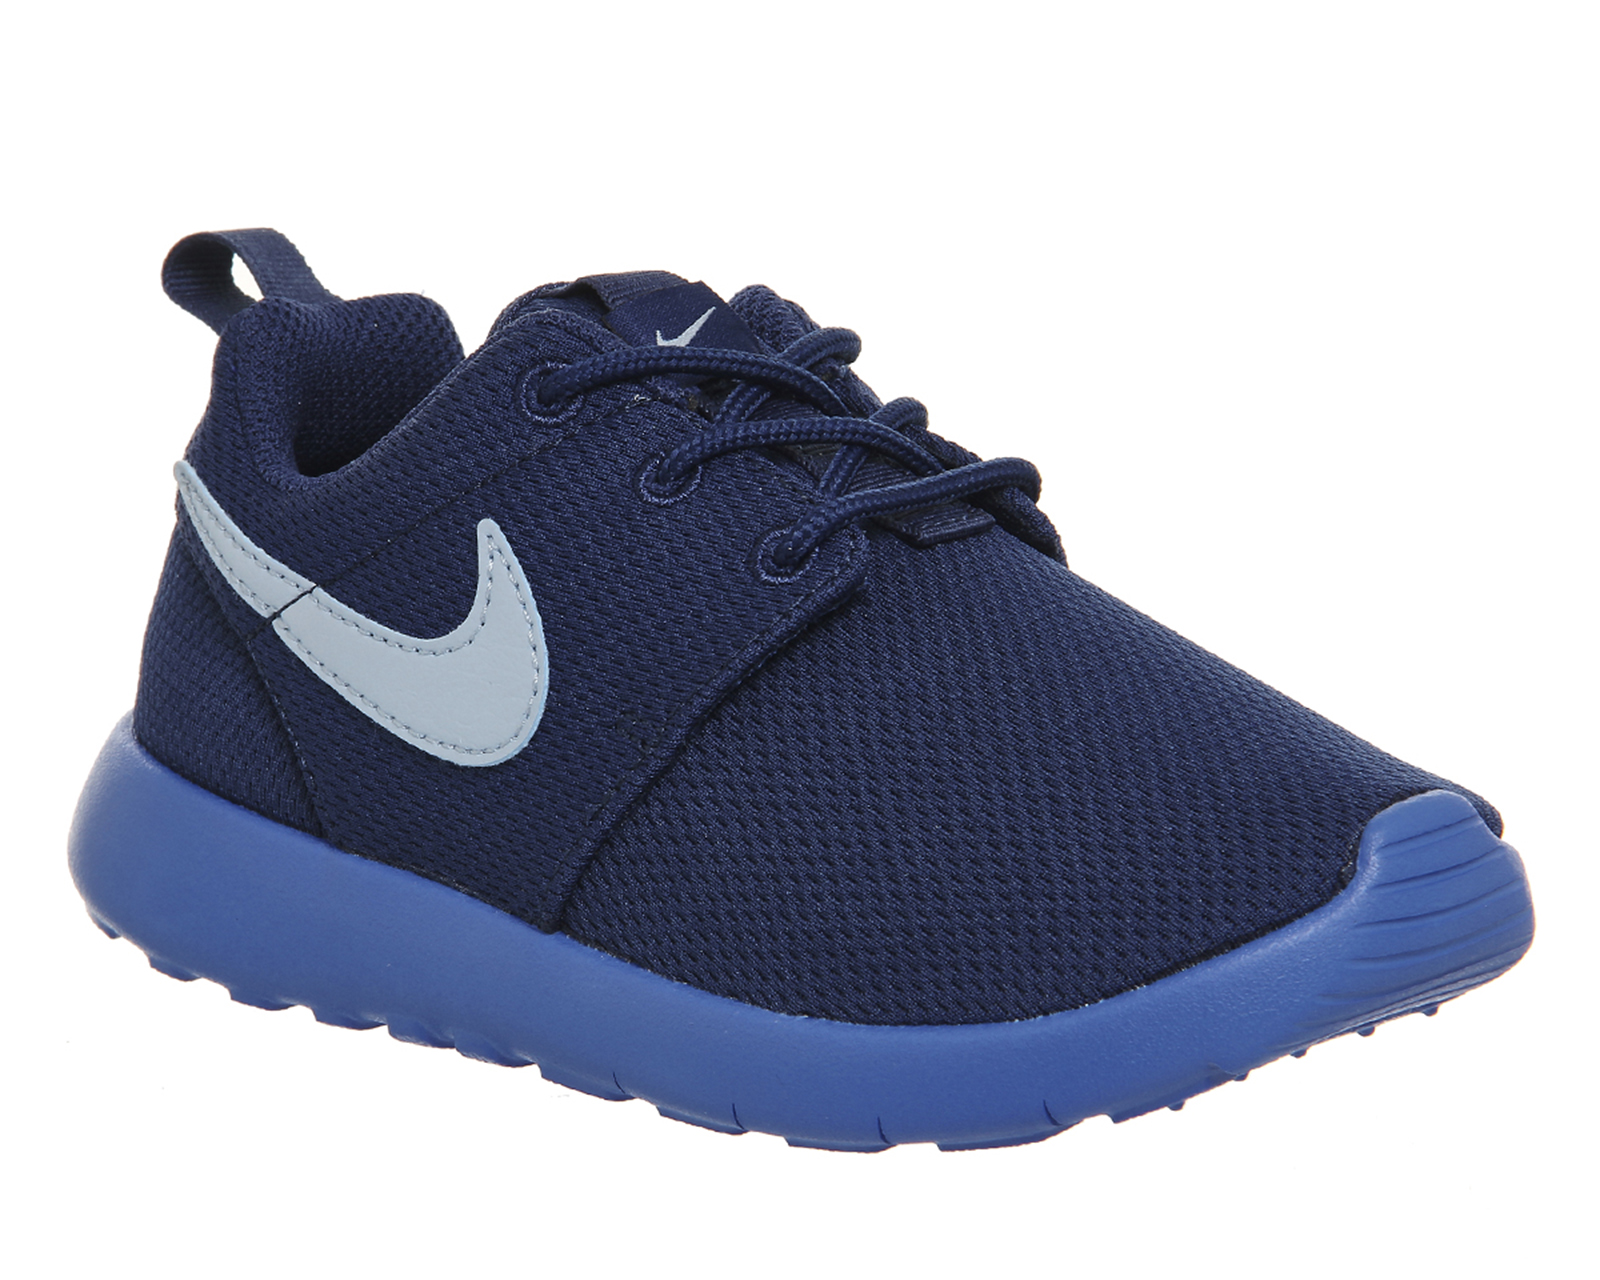 NikeRoshe Run PsCoastal Blue Grey Hyper Cobalt